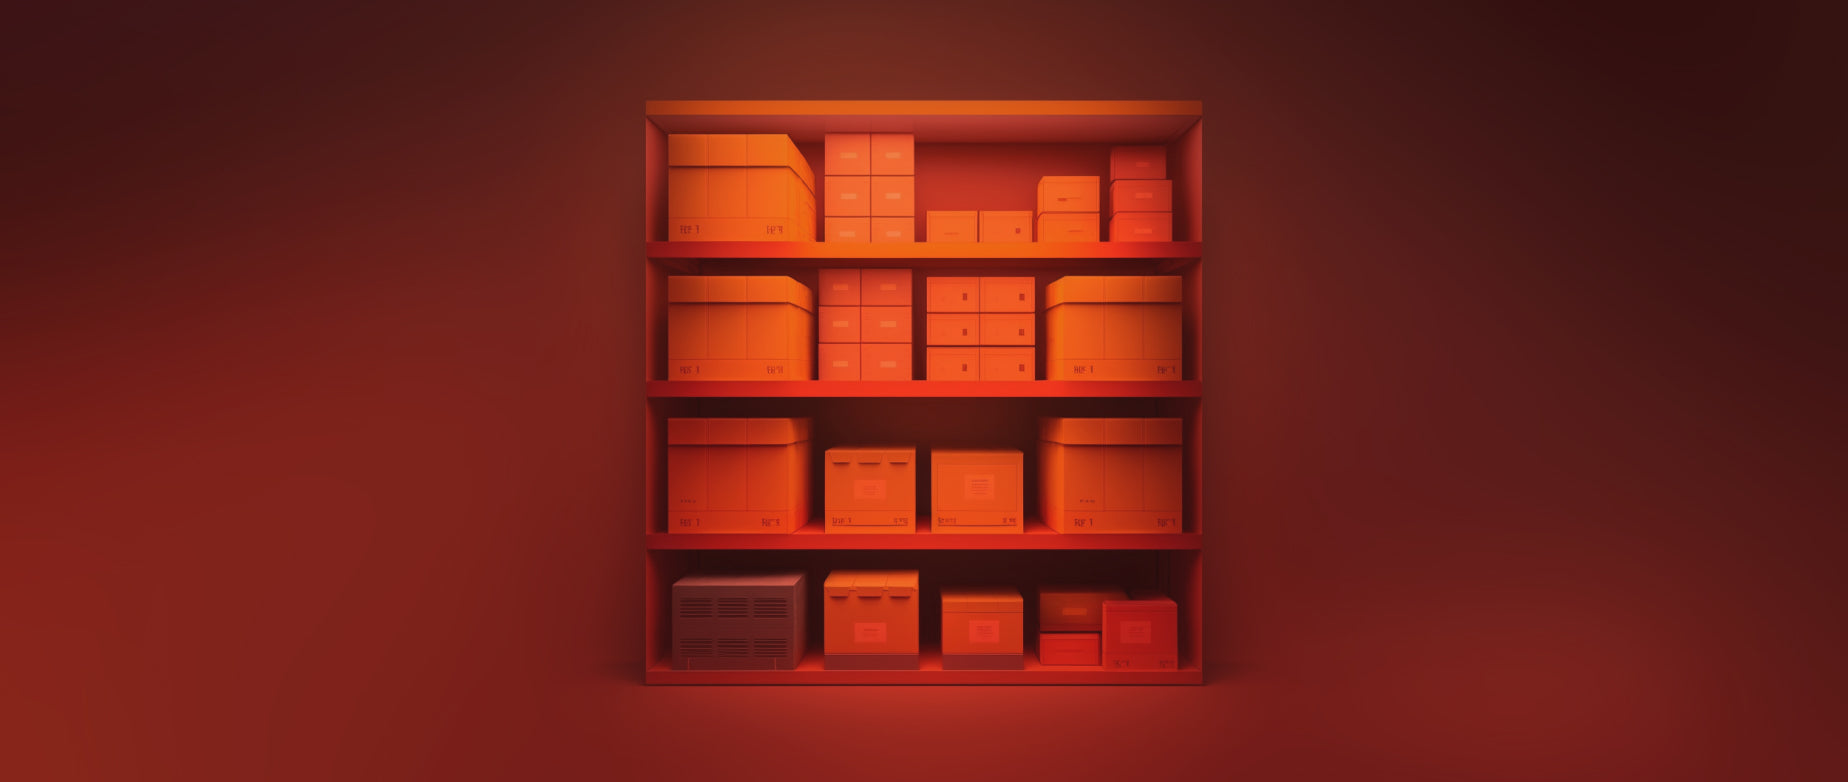 shelf full of storage boxes: inventory replenishment